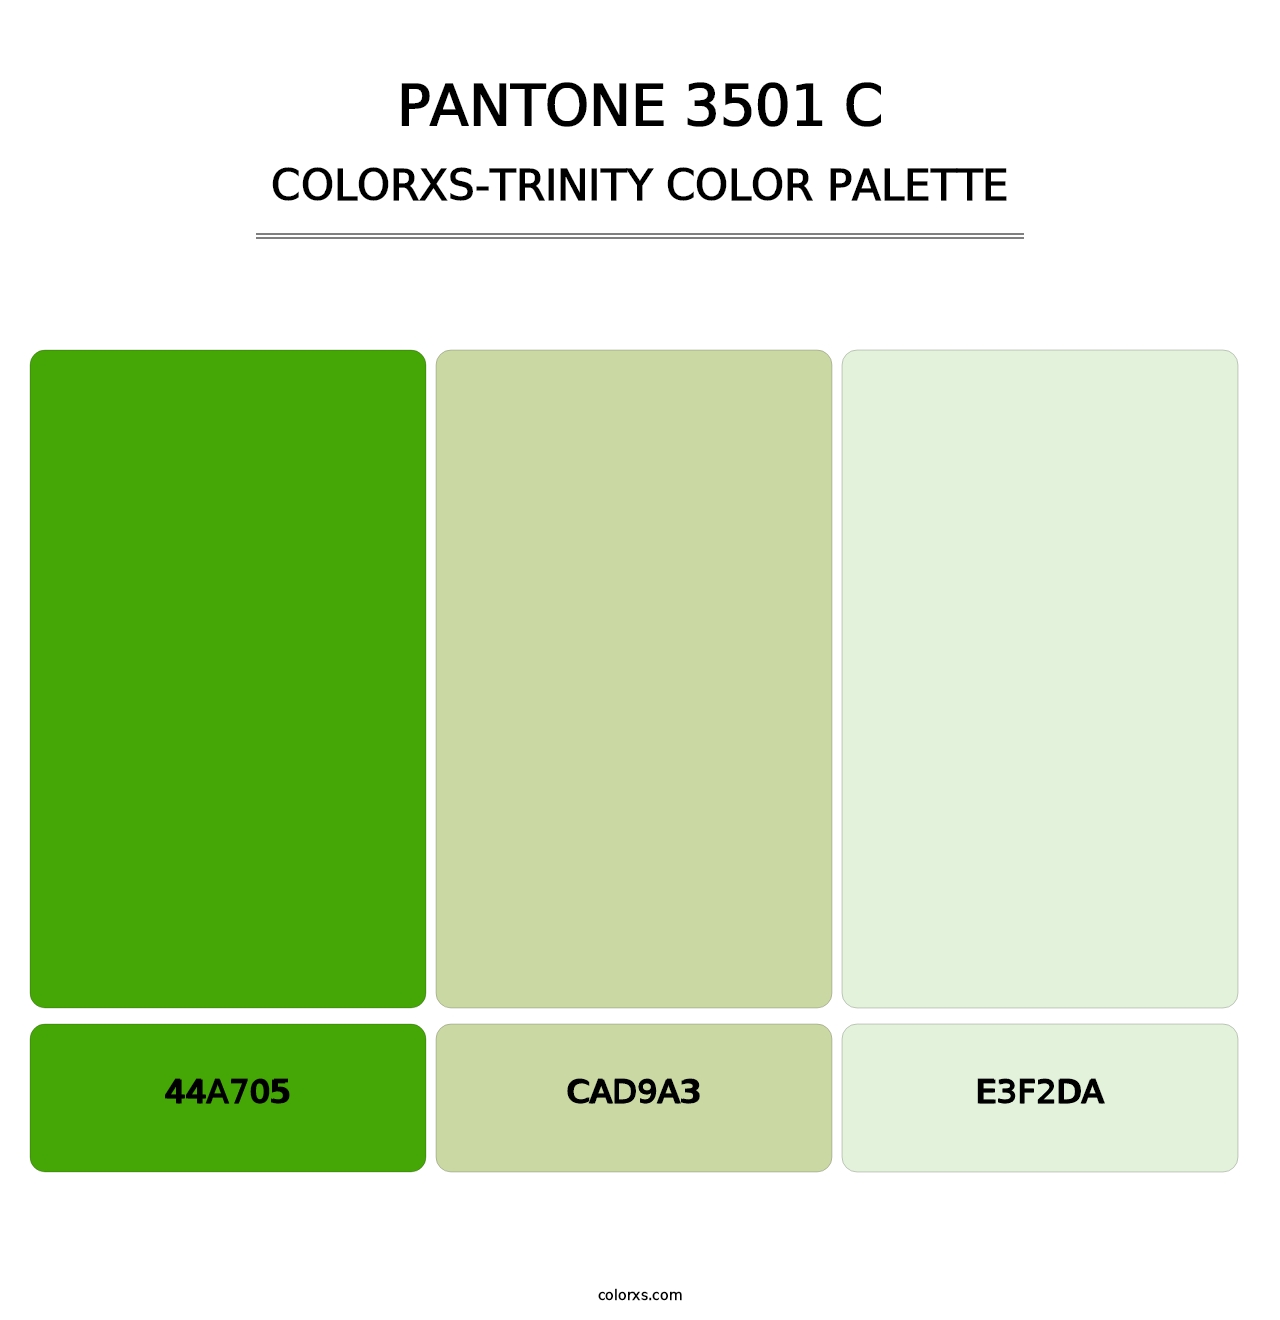 PANTONE 3501 C - Colorxs Trinity Palette